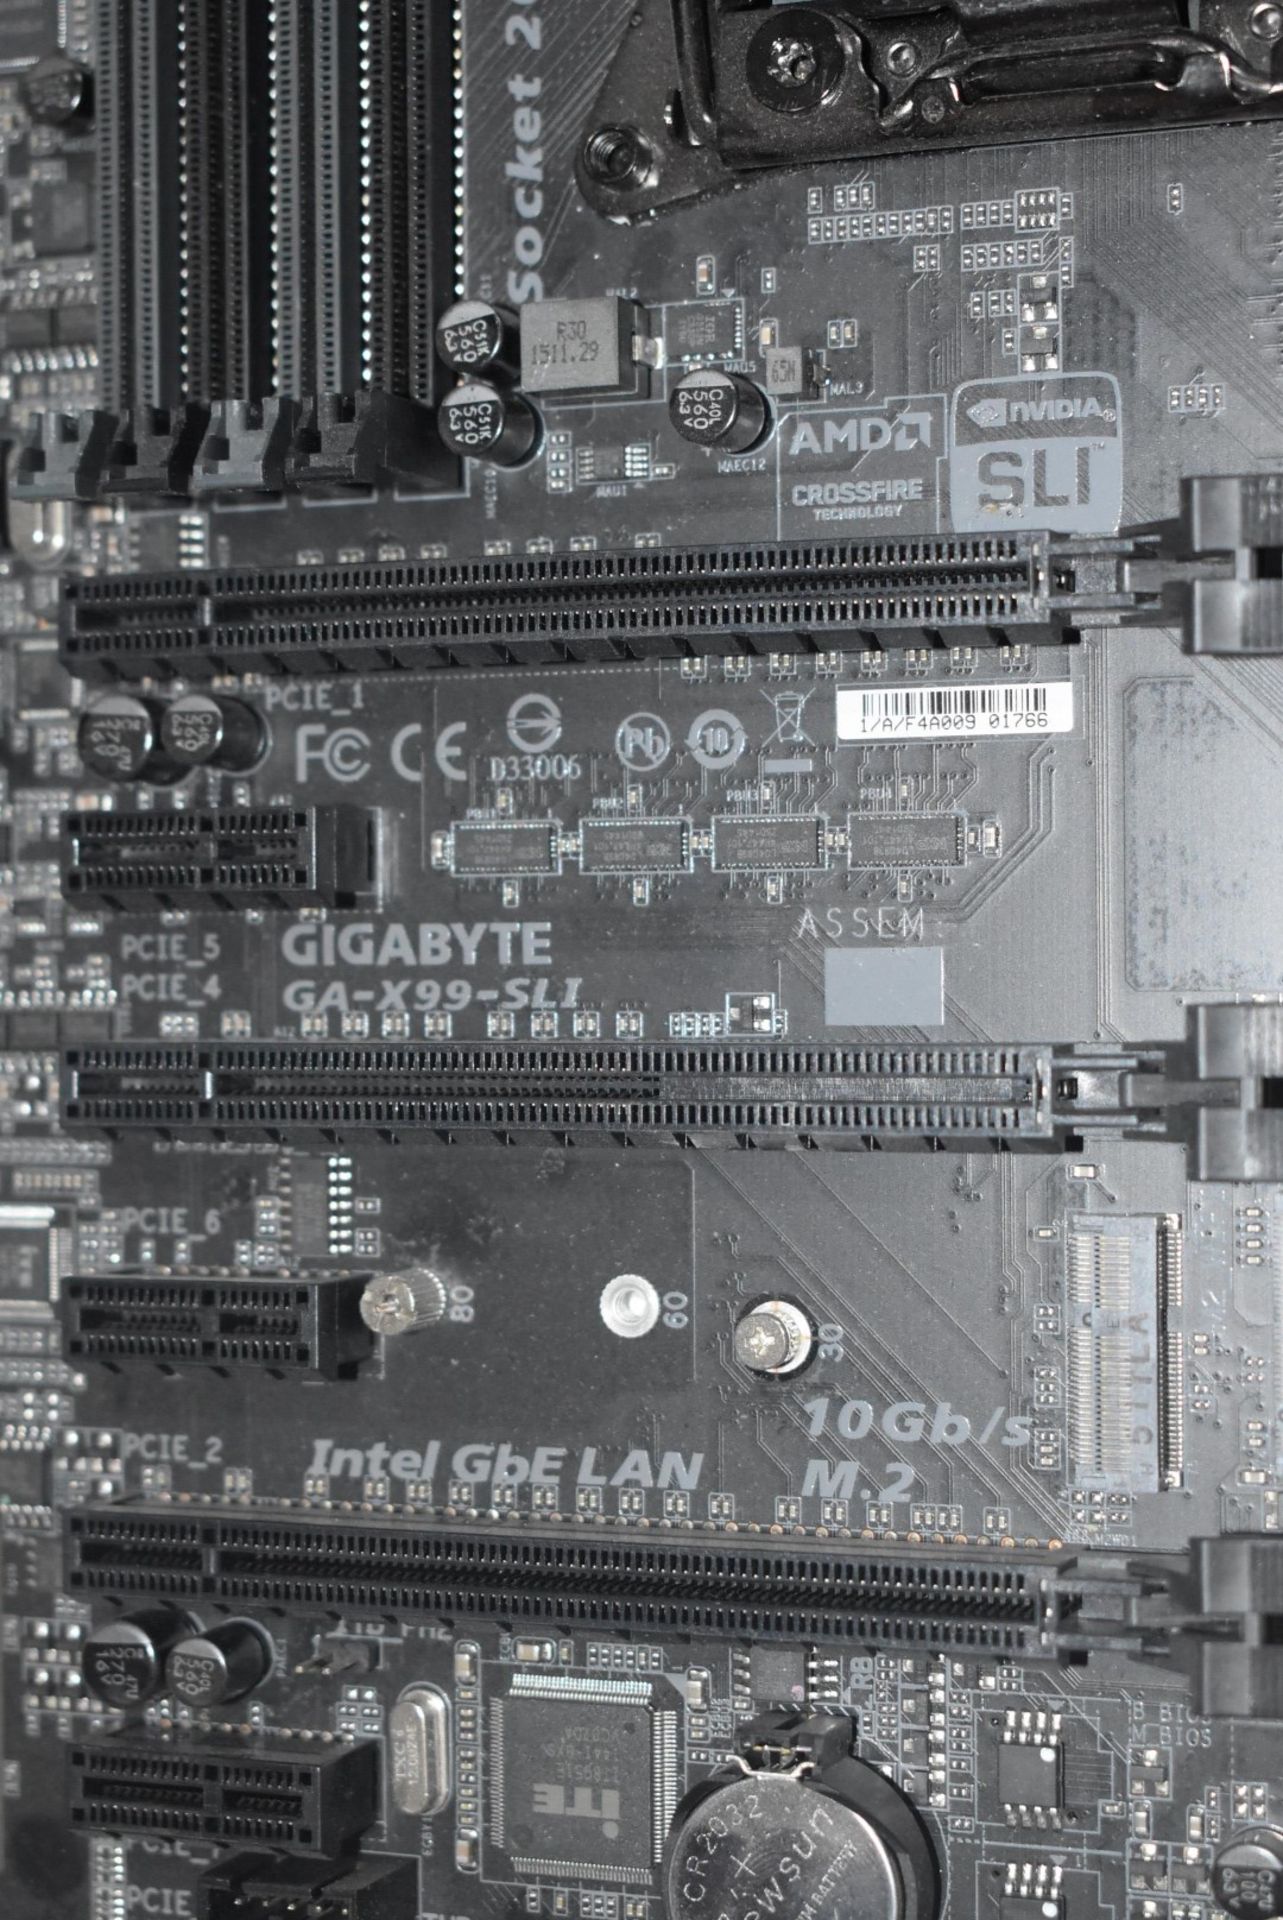 1 x Gigabyte GA-X99-SLI Motherboard With an Intel Core i7-5820k Processor - Image 2 of 5